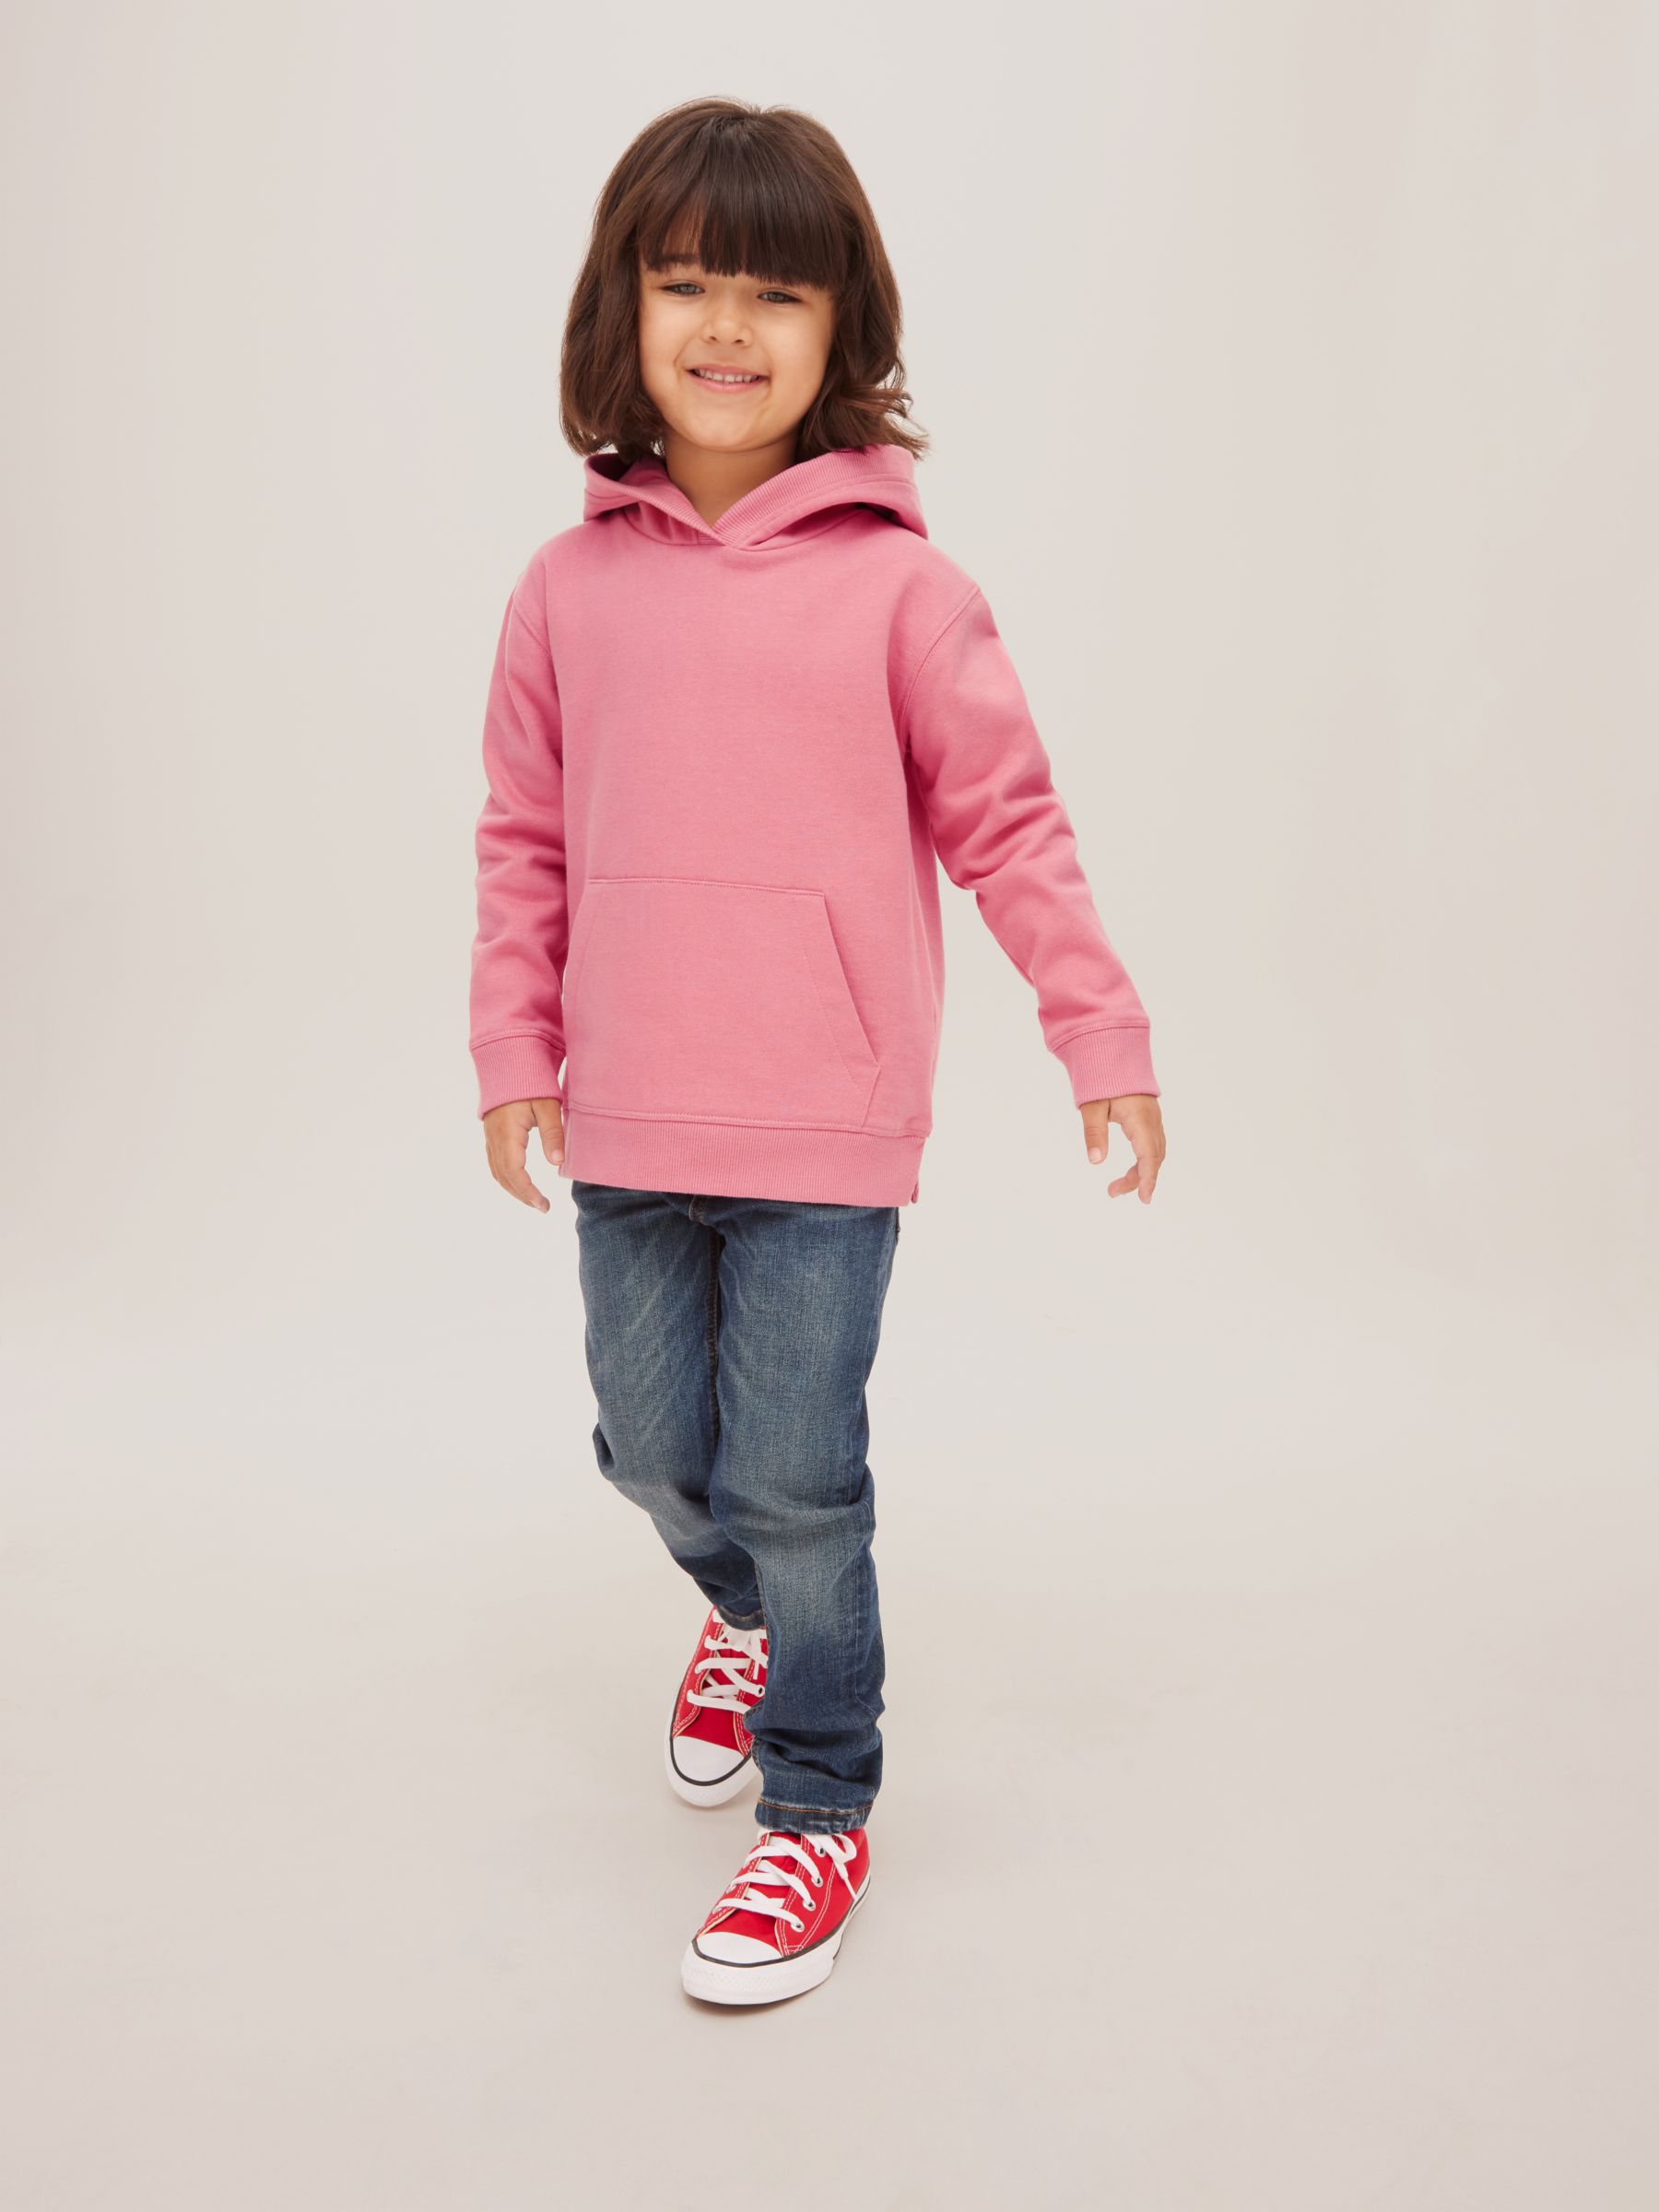 Ofenbuy Kids Girl's Fuzzy Hoodies Zipper Warm Loose Sherpa Hooded Sweatshirt Pullover With Pockets 